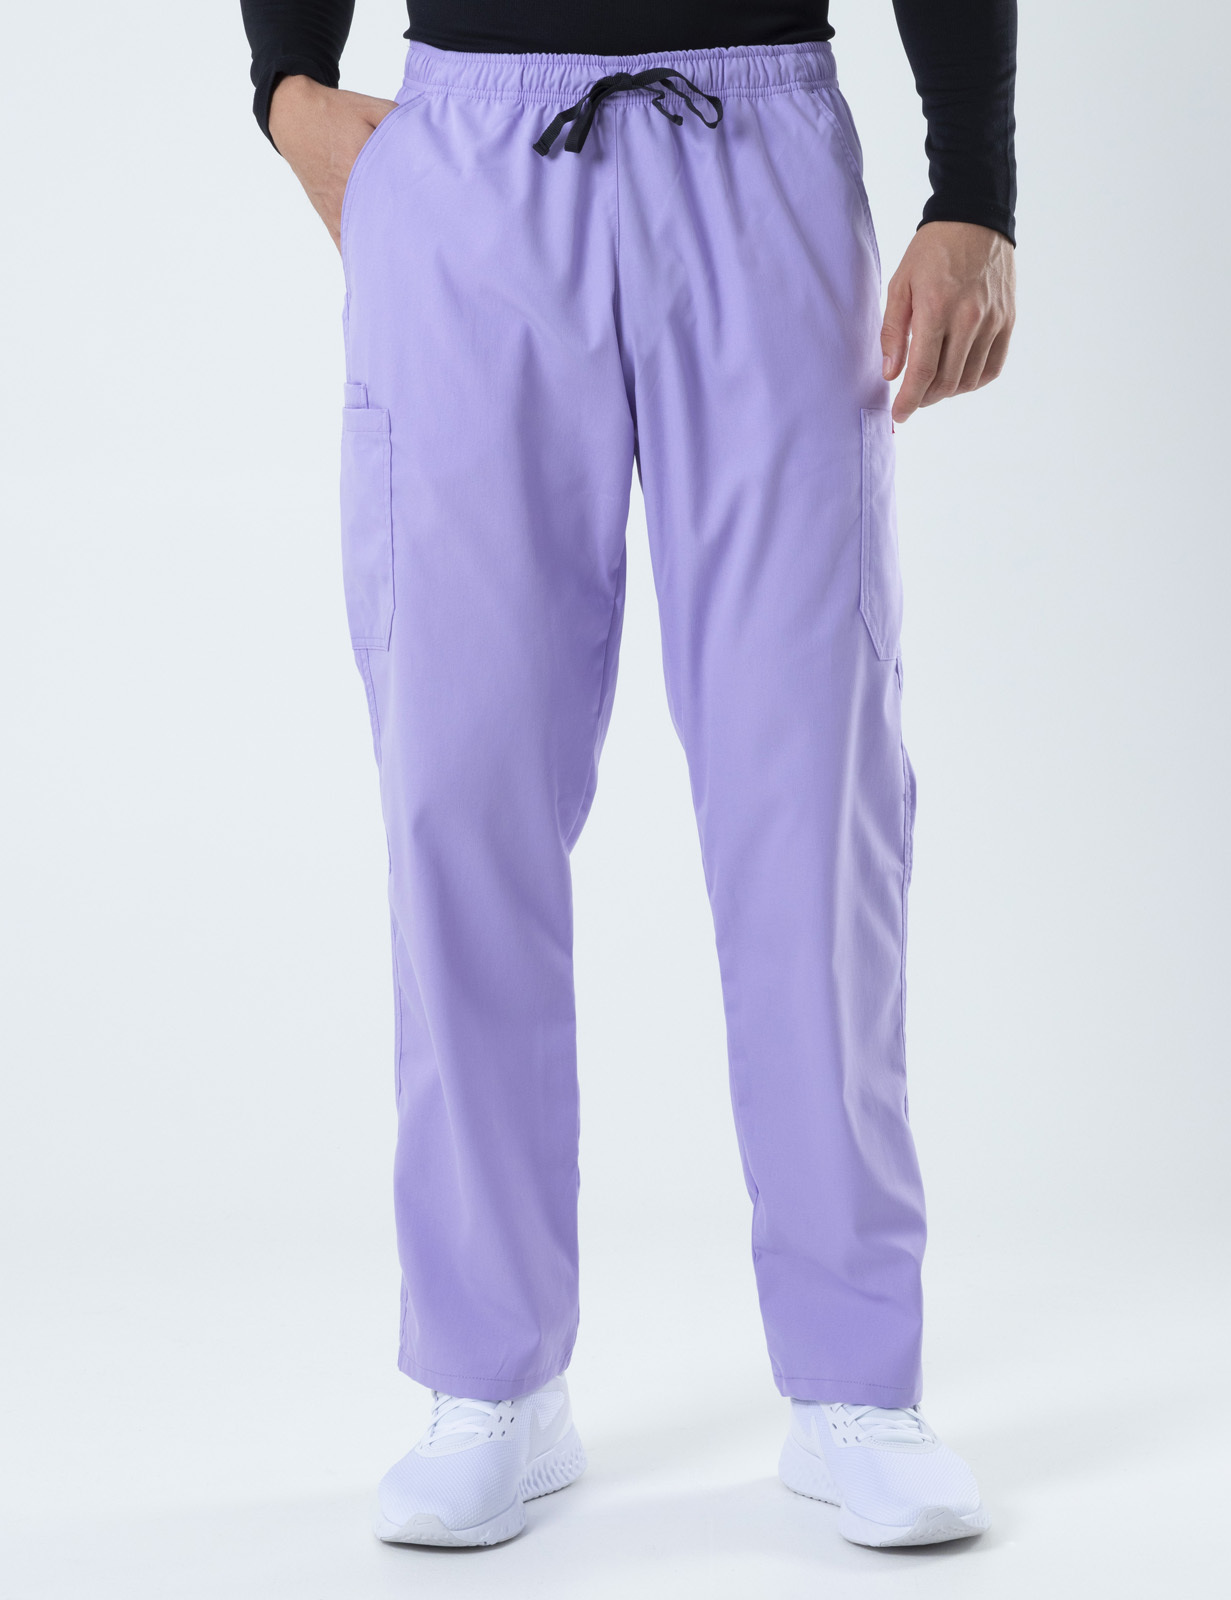 Men's Cargo Performance Pants - Lilac - Medium